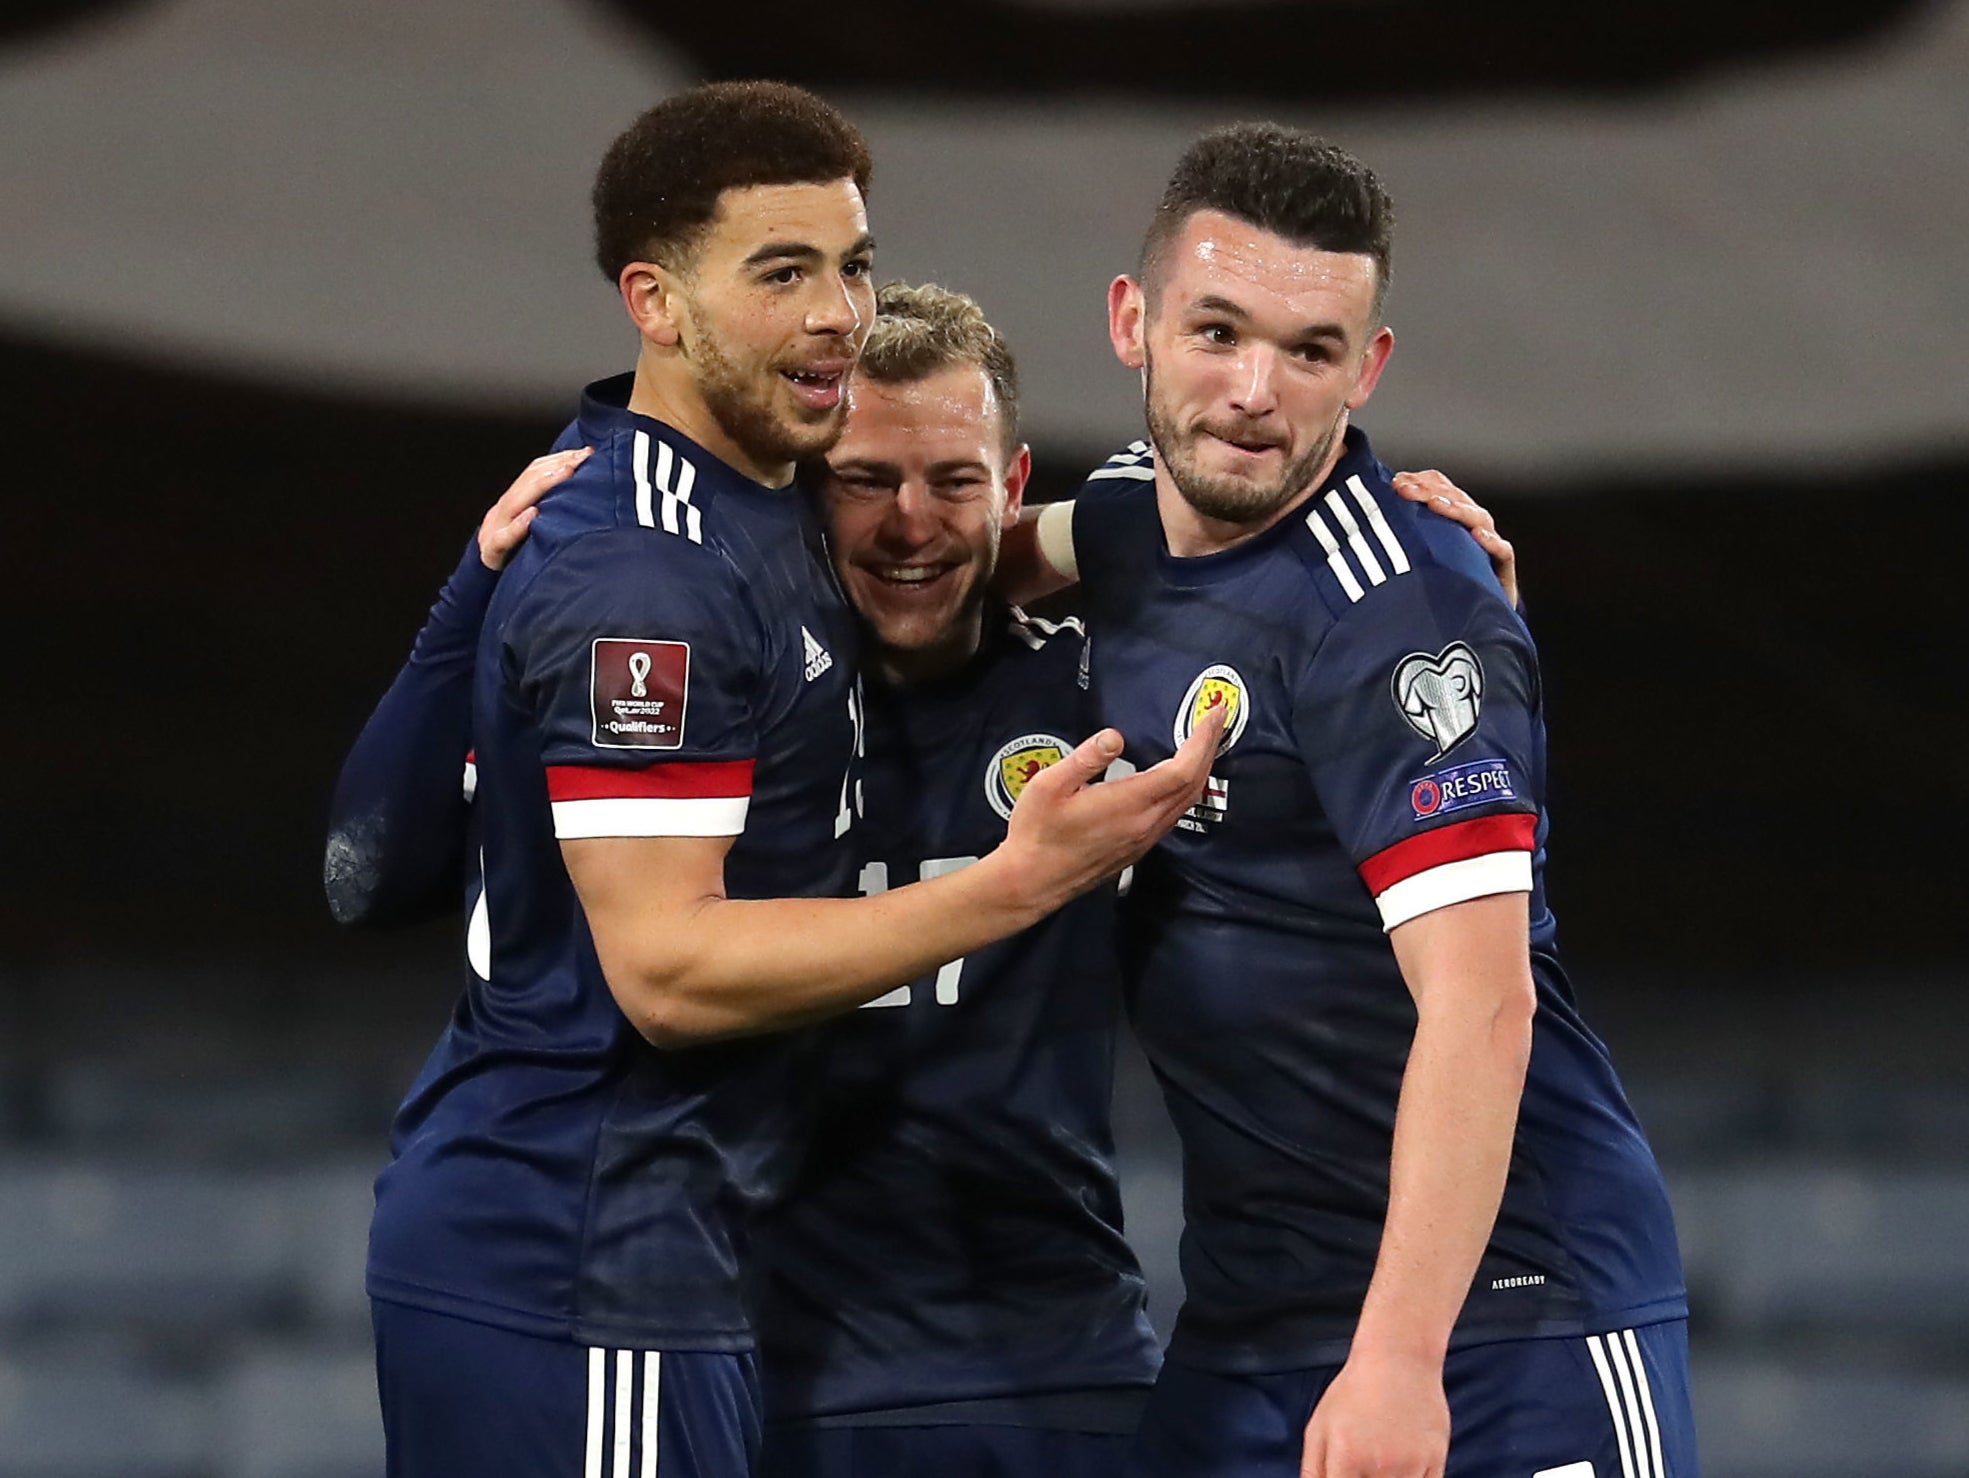 Scotland players celebrate scoring a goal